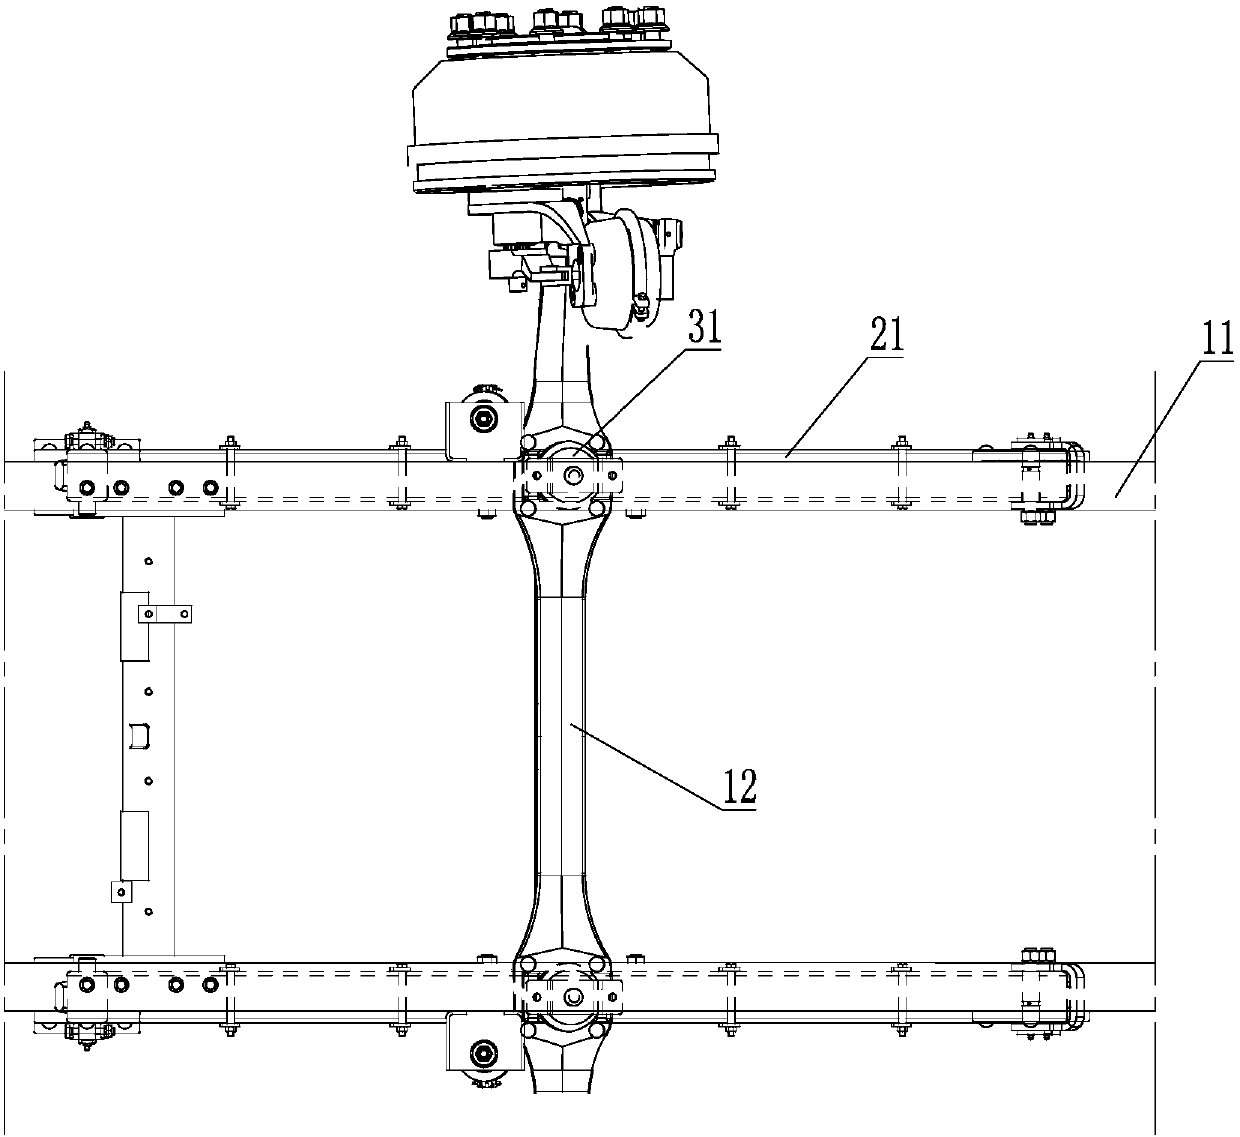 Compound automobile suspension system